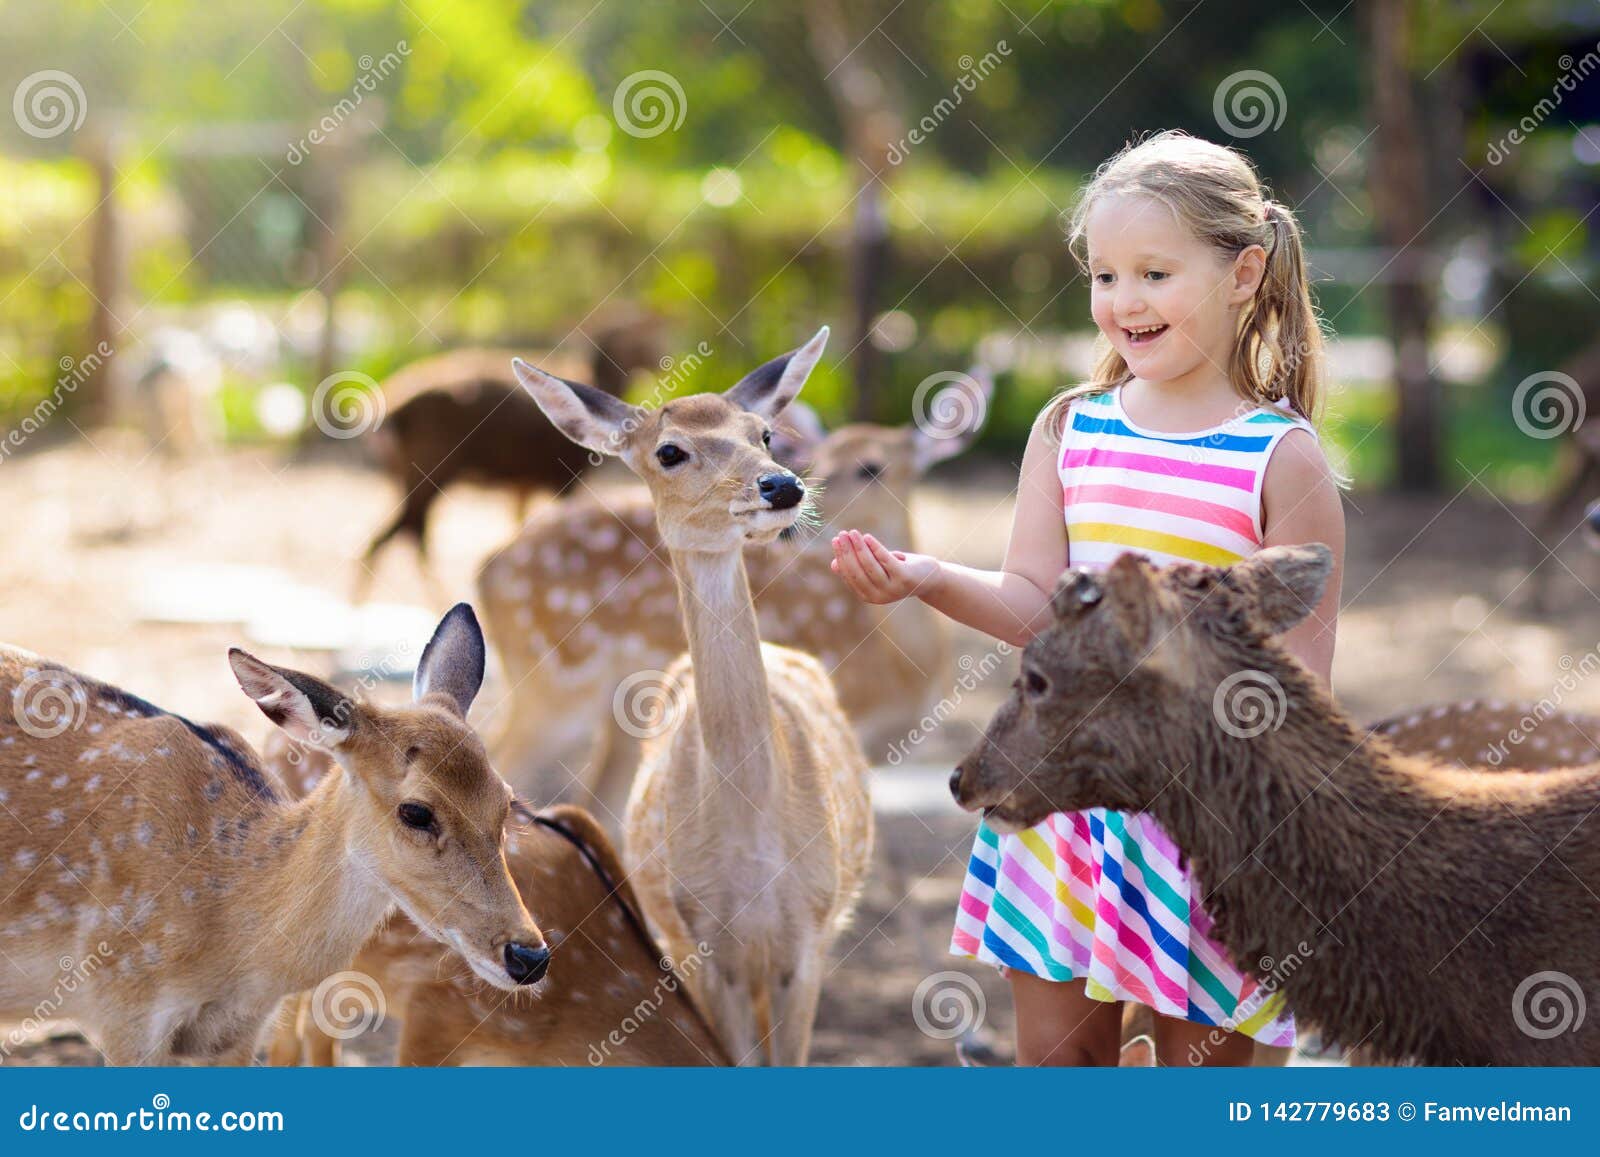 child feeding wild deer at zoo. kids feed animals